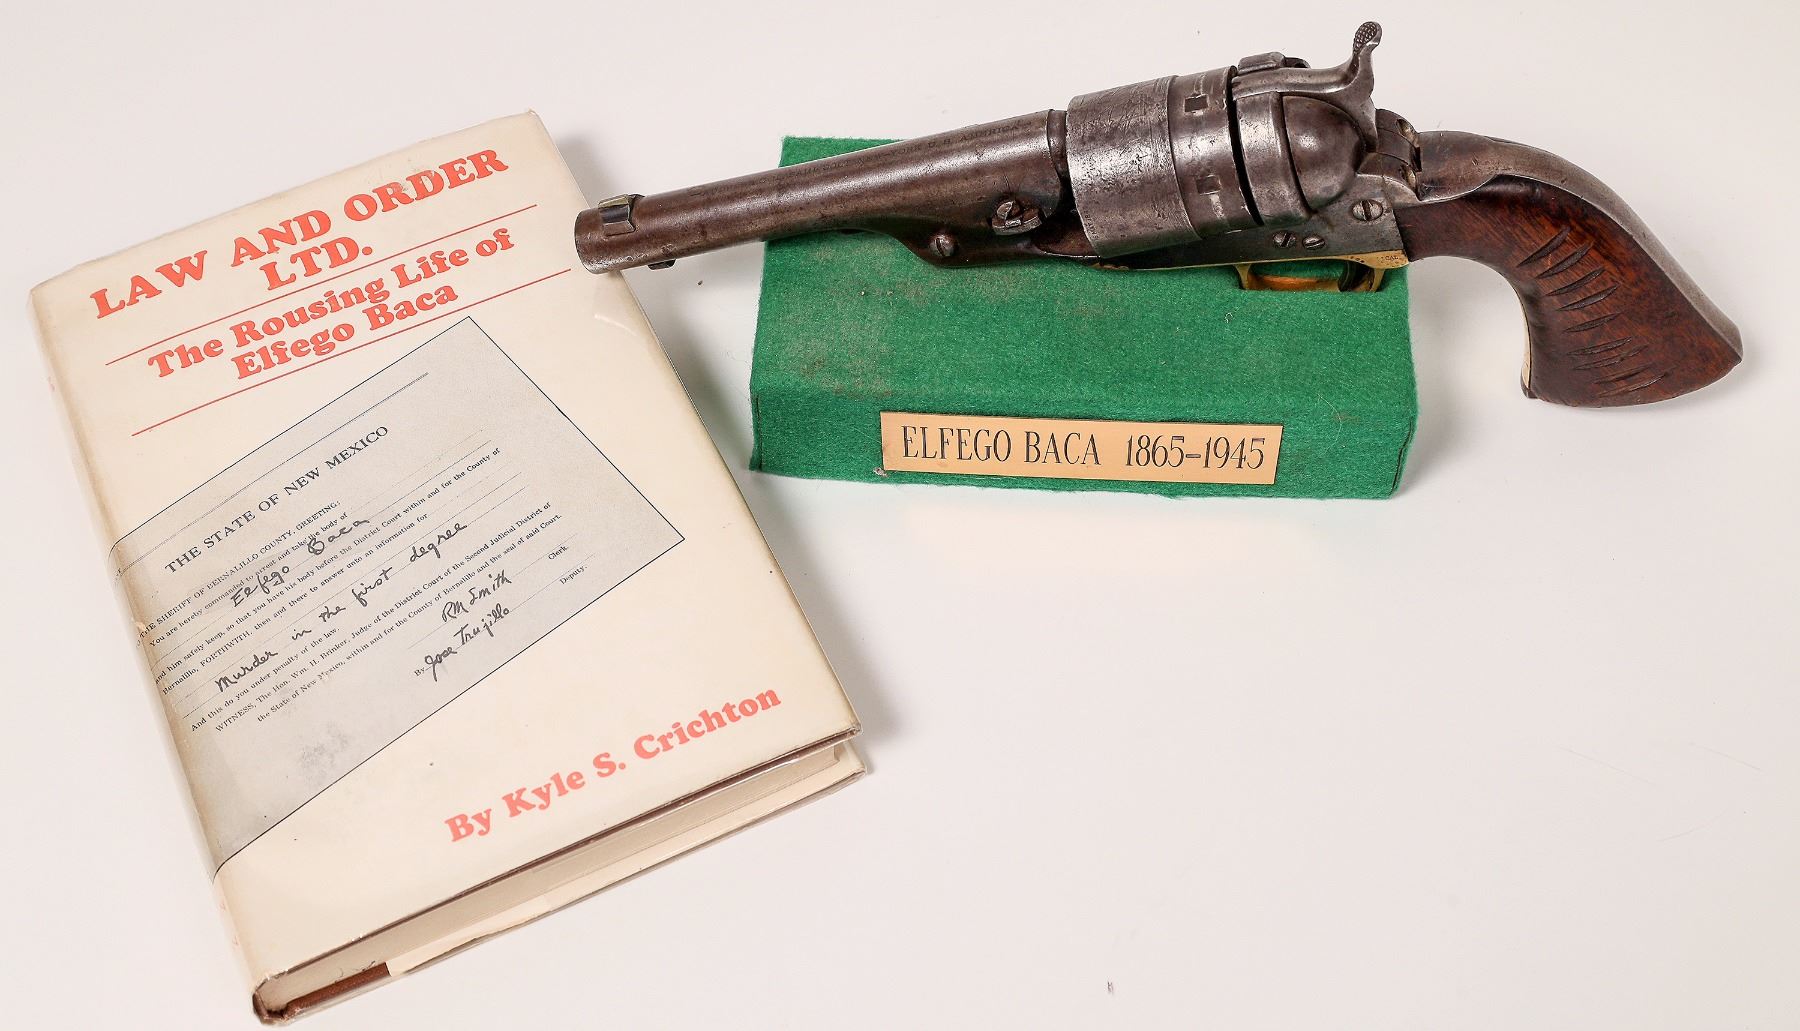 1860 Colt Army revolver owned by Elfego Baca, est. $20,000-$25,000